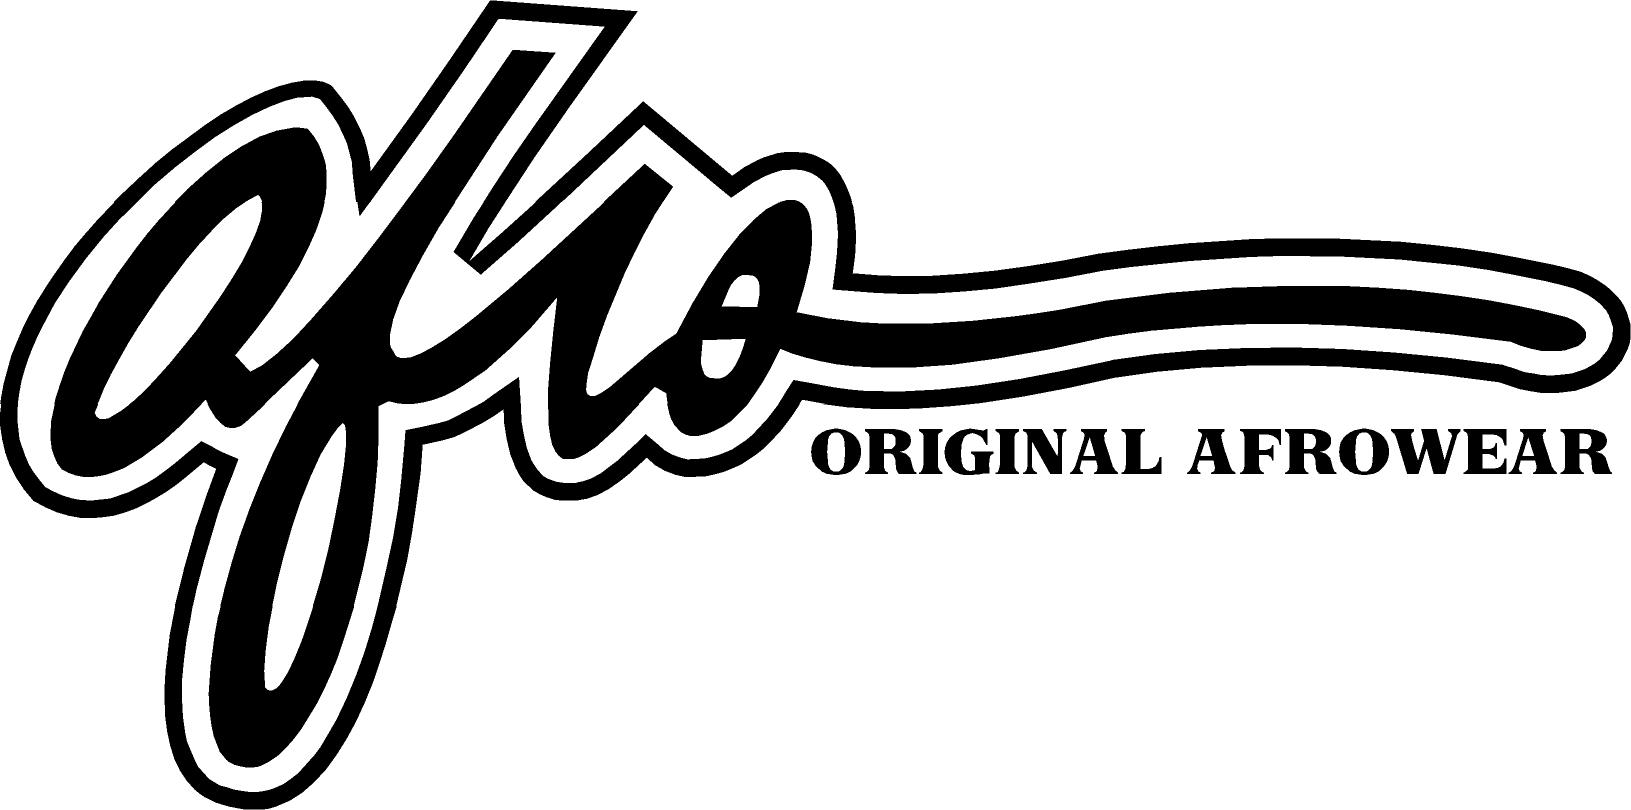 Originalafrowear Logo